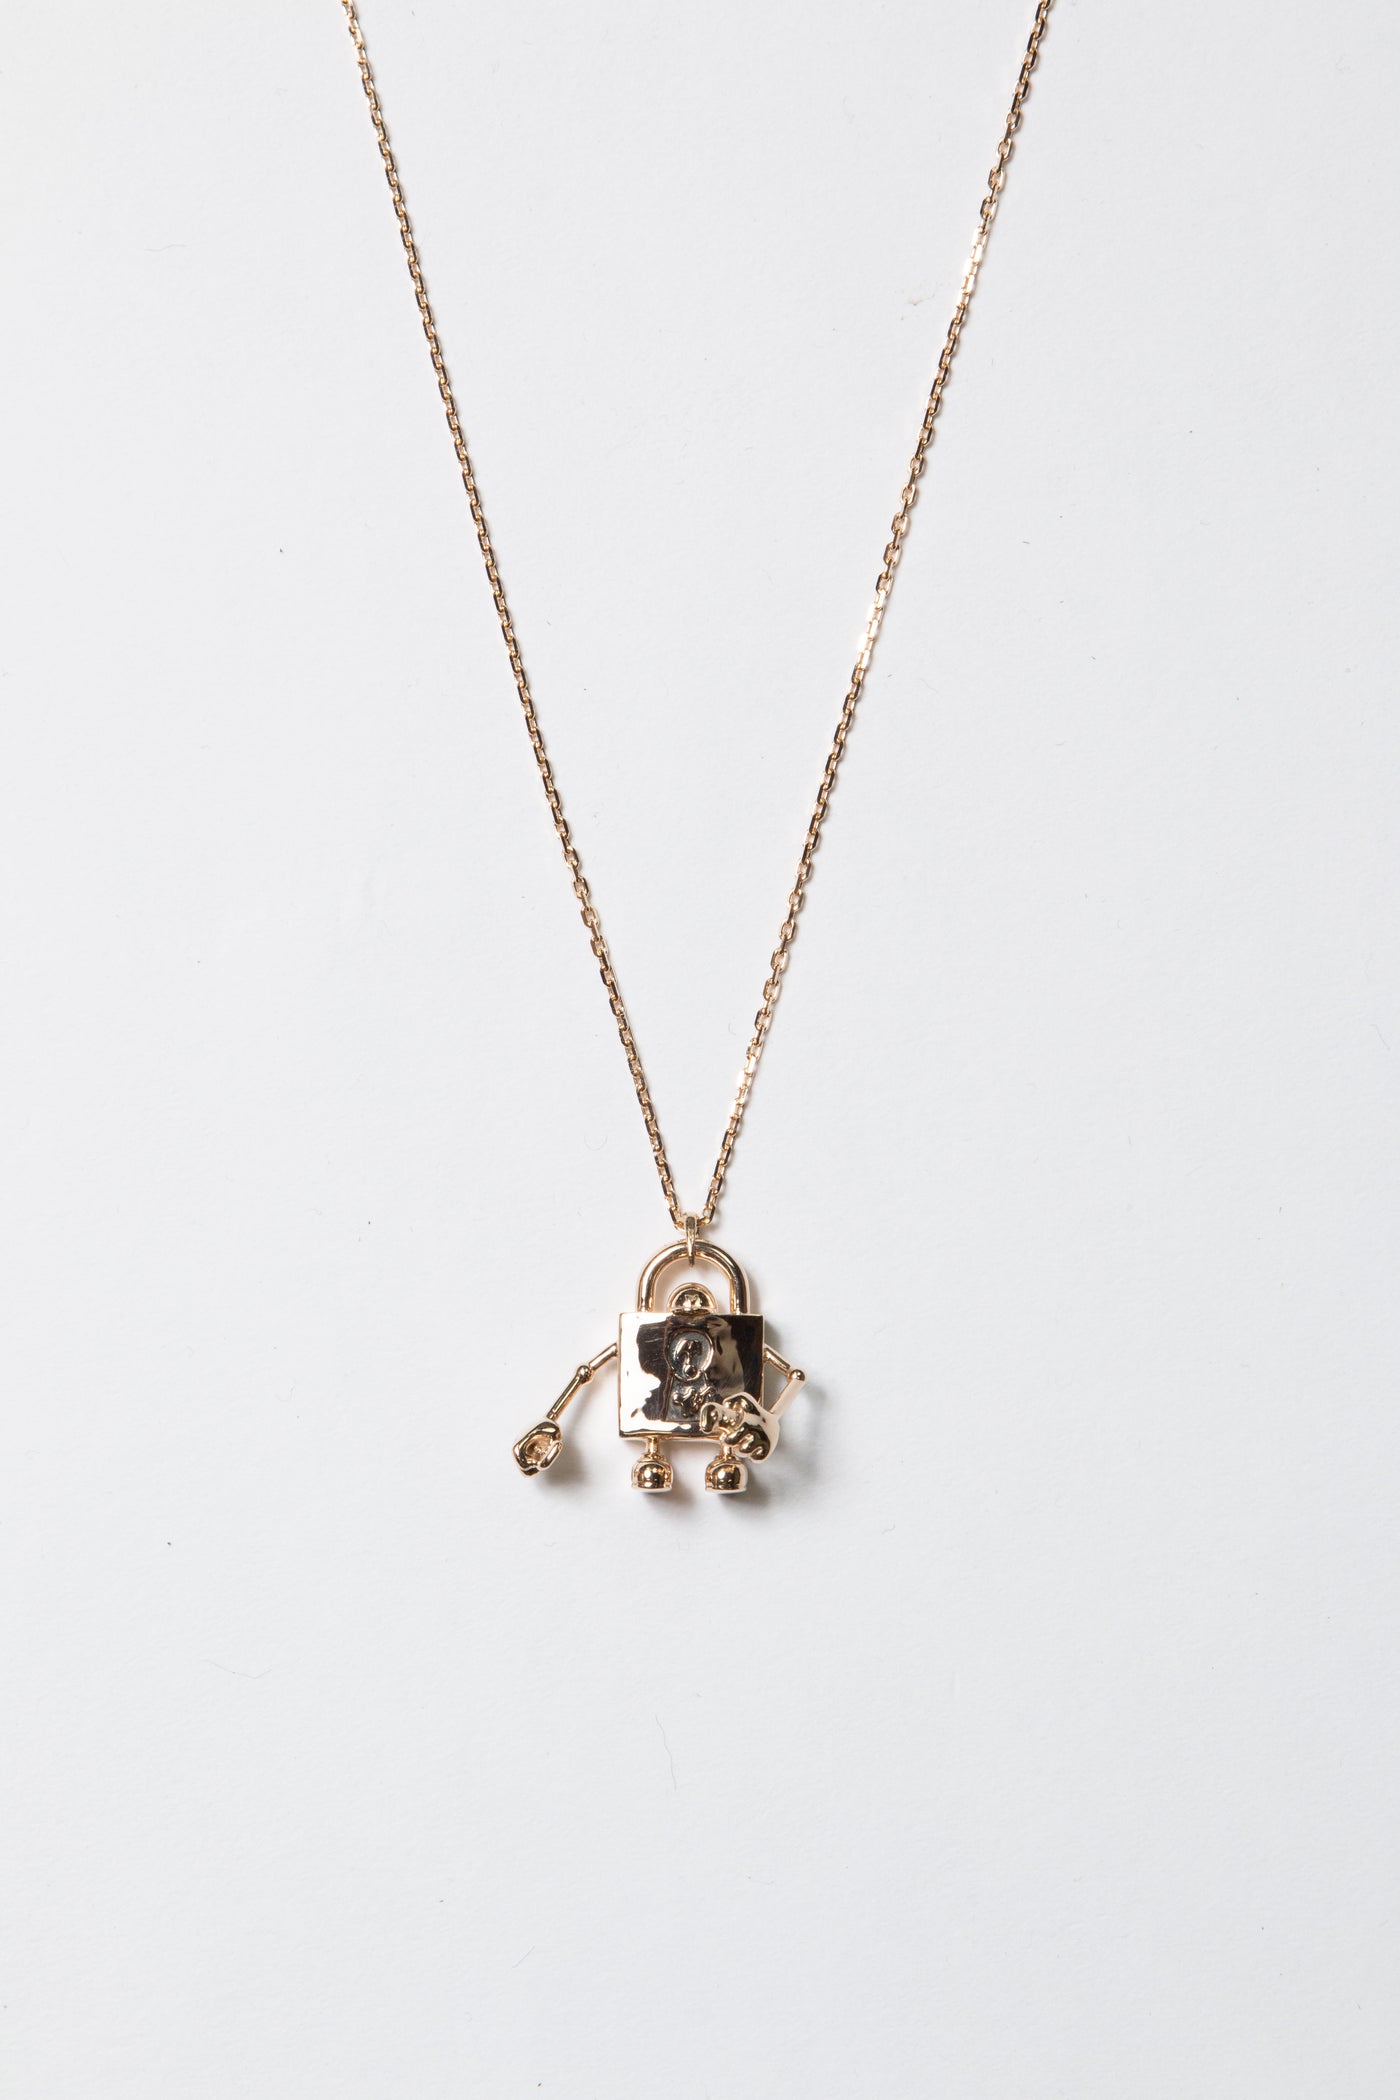 vaultroom key necklace “R” ネックレス | www.innoveering.net